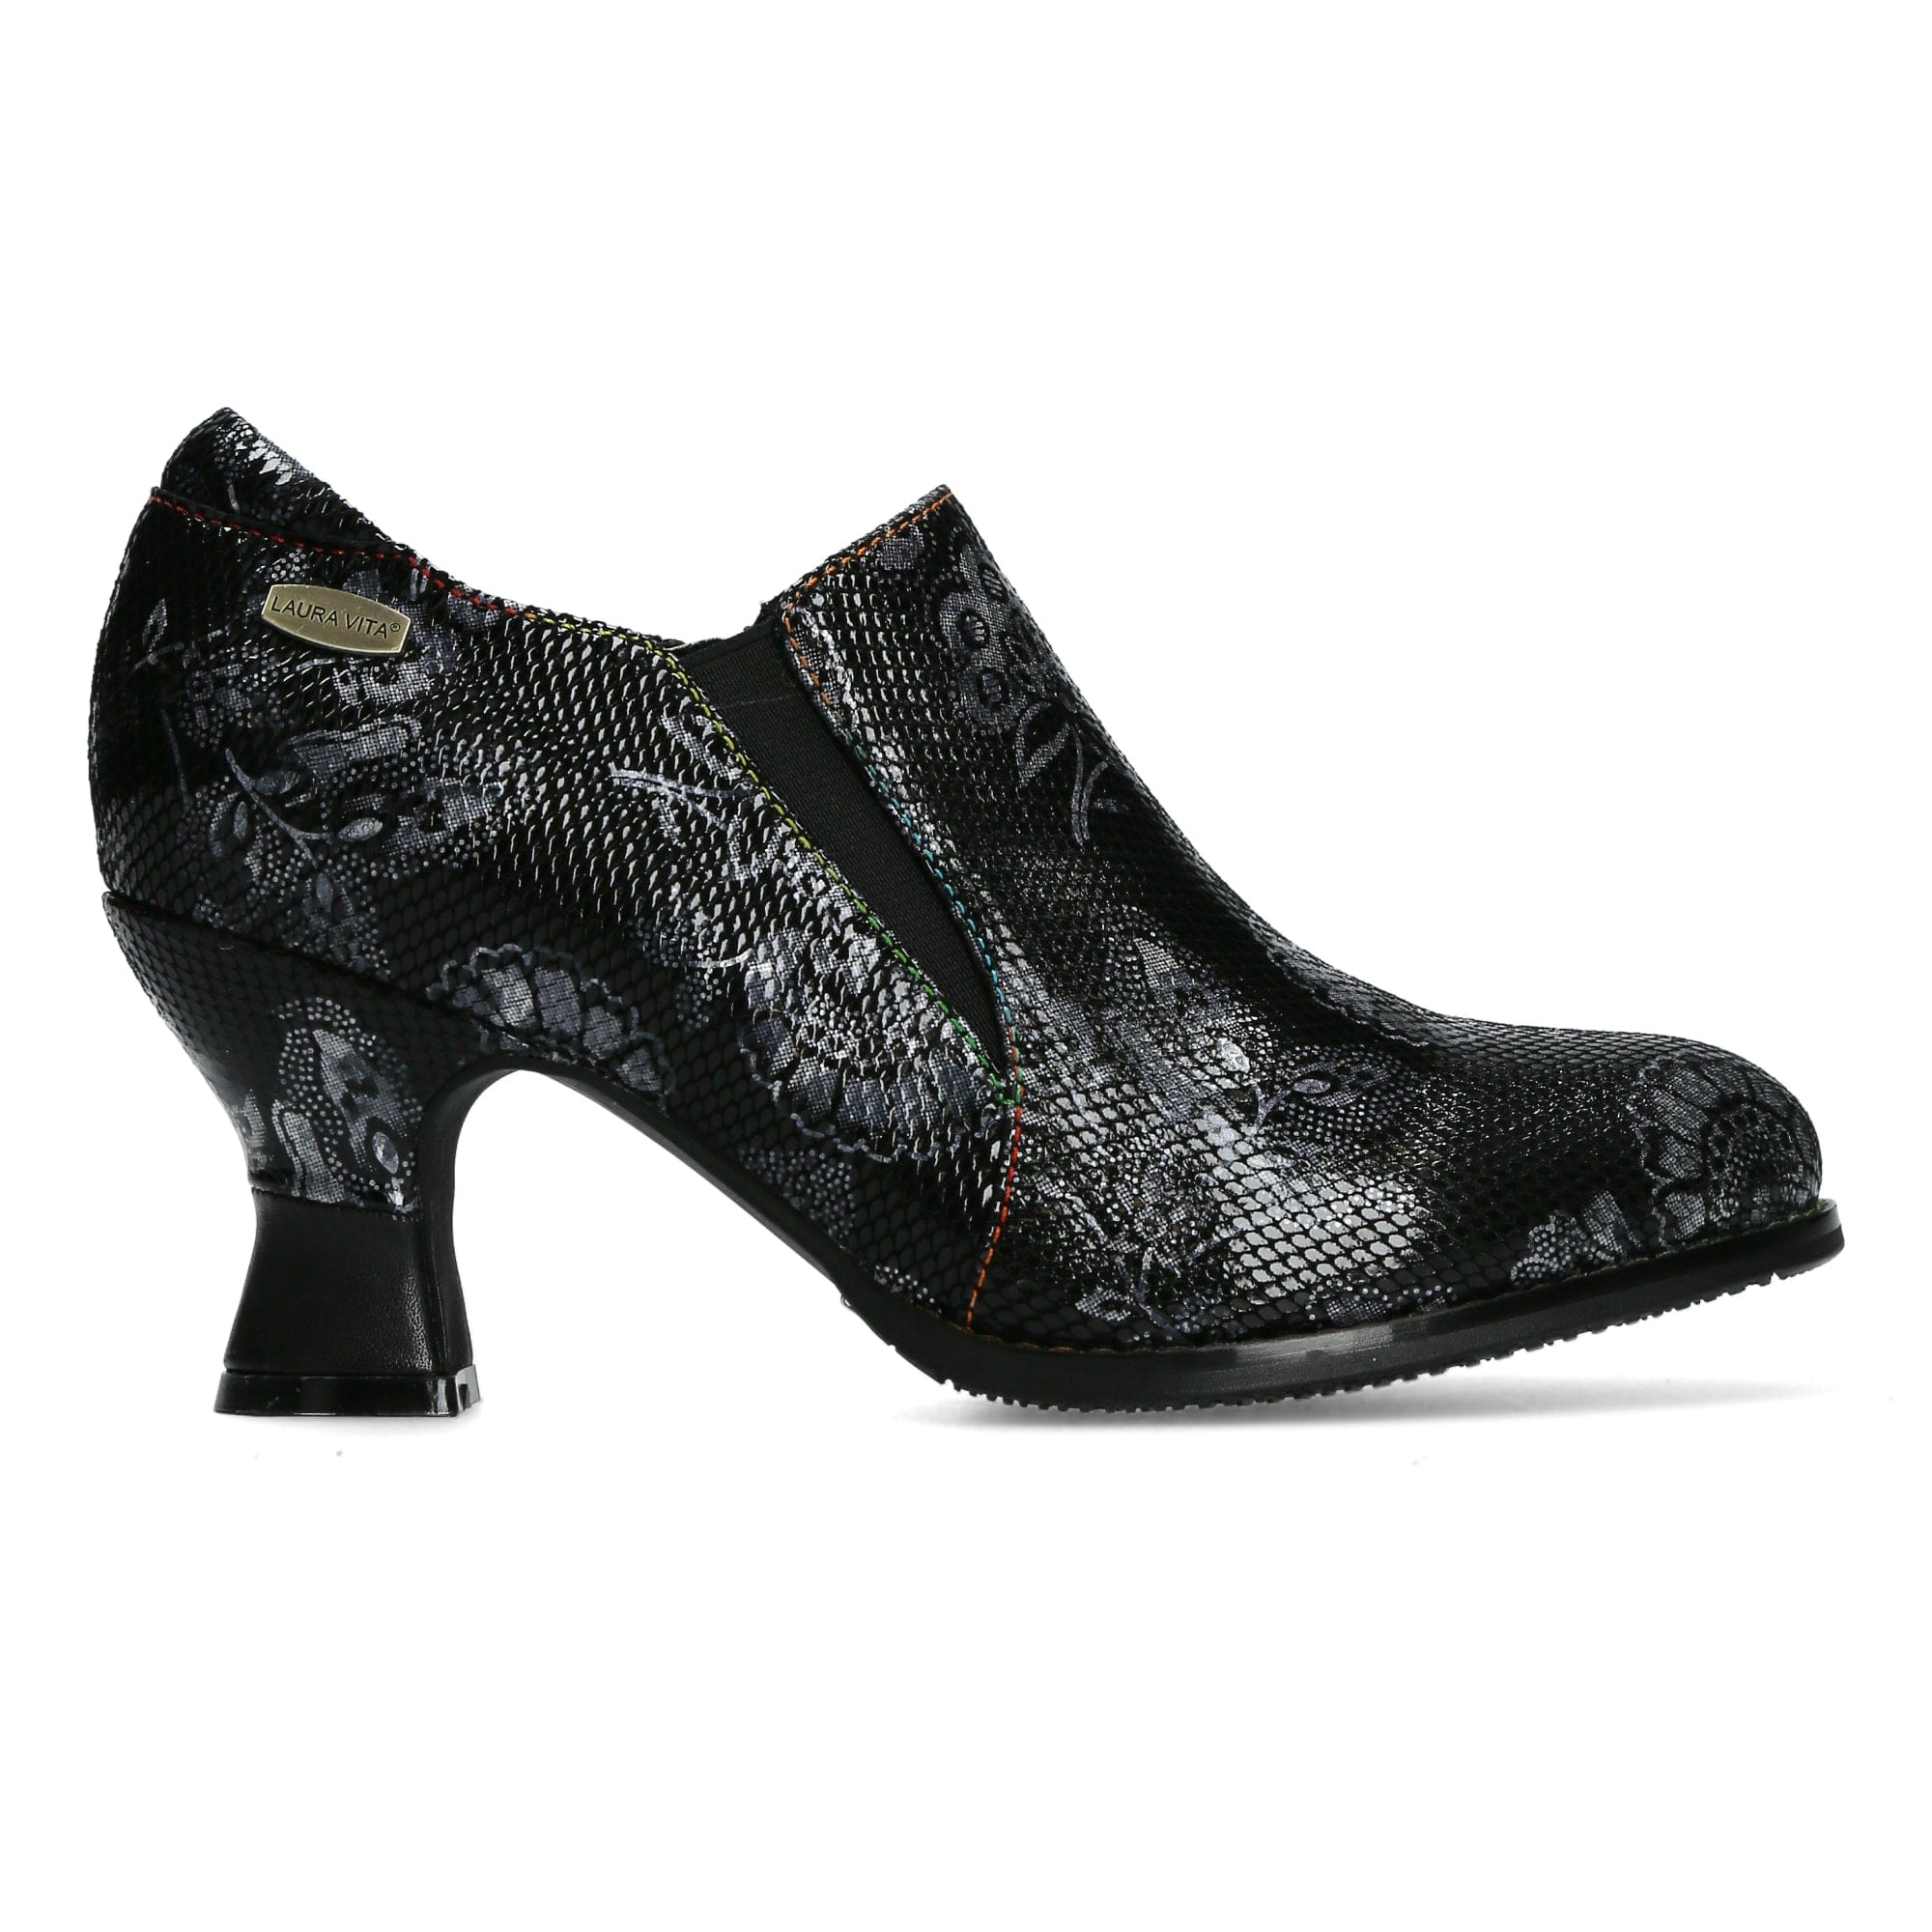 Shoe GICGASO 02 - 35 / Black - Moccasin